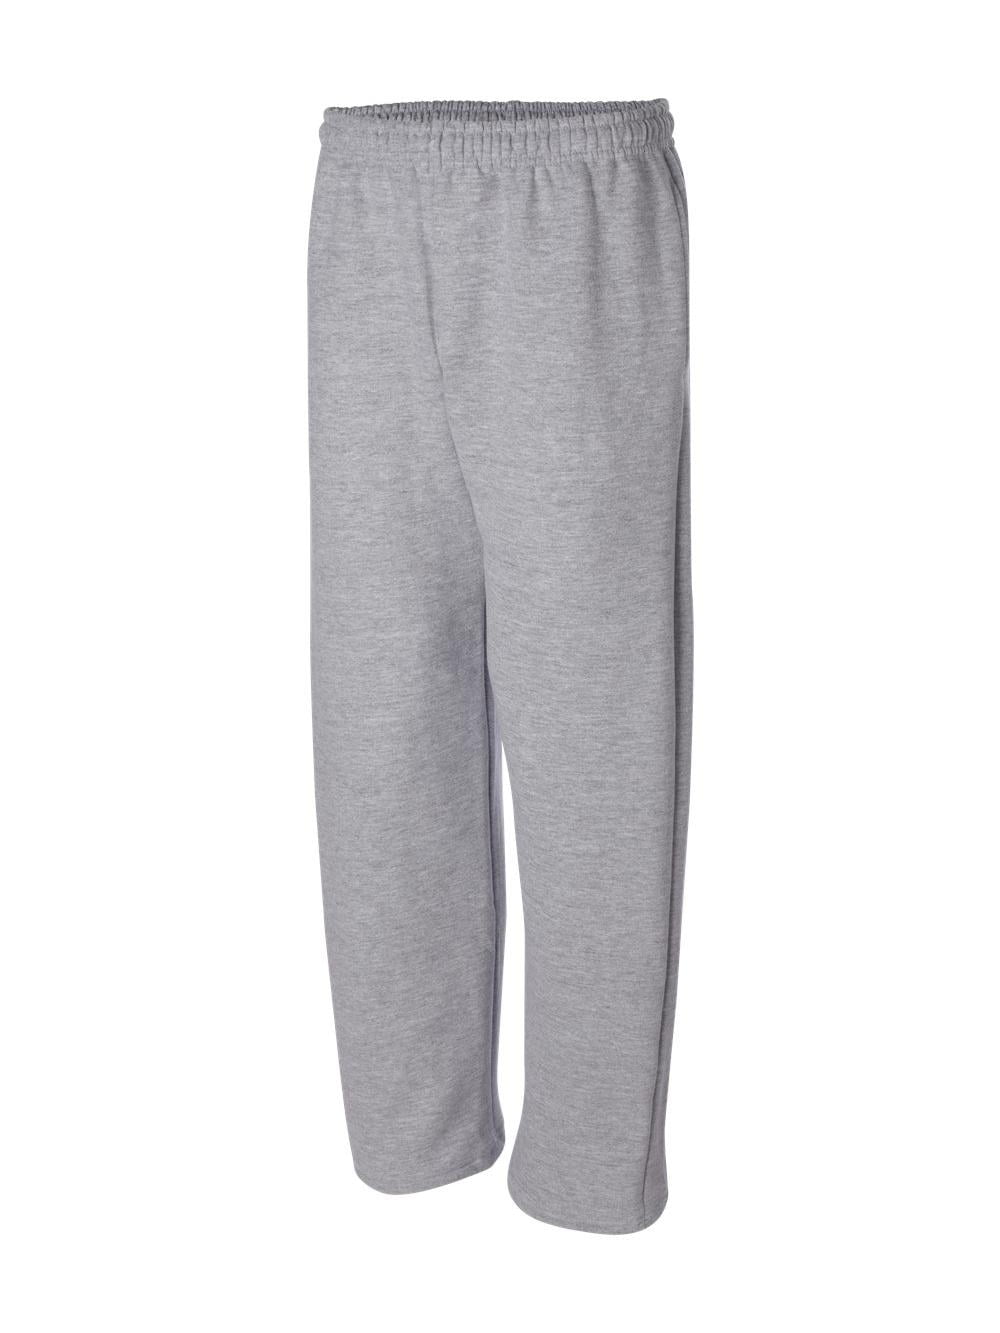 Gildan - DryBlend Open-Bottom Sweatpants with Pockets - 12300 - Walmart.com